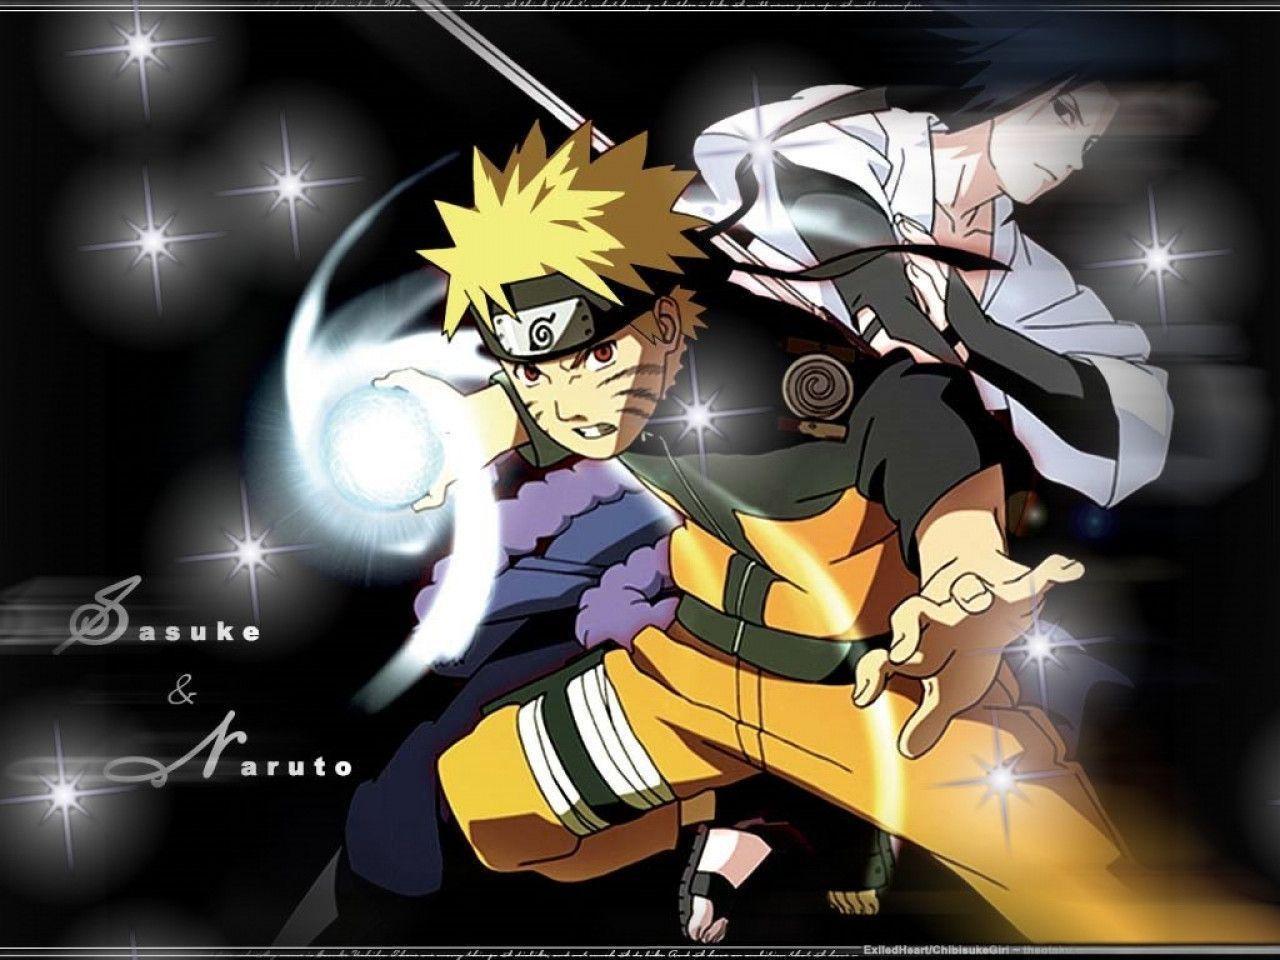 Wallpaper Keren: Special Naruto vs Sasuke Wallpaper